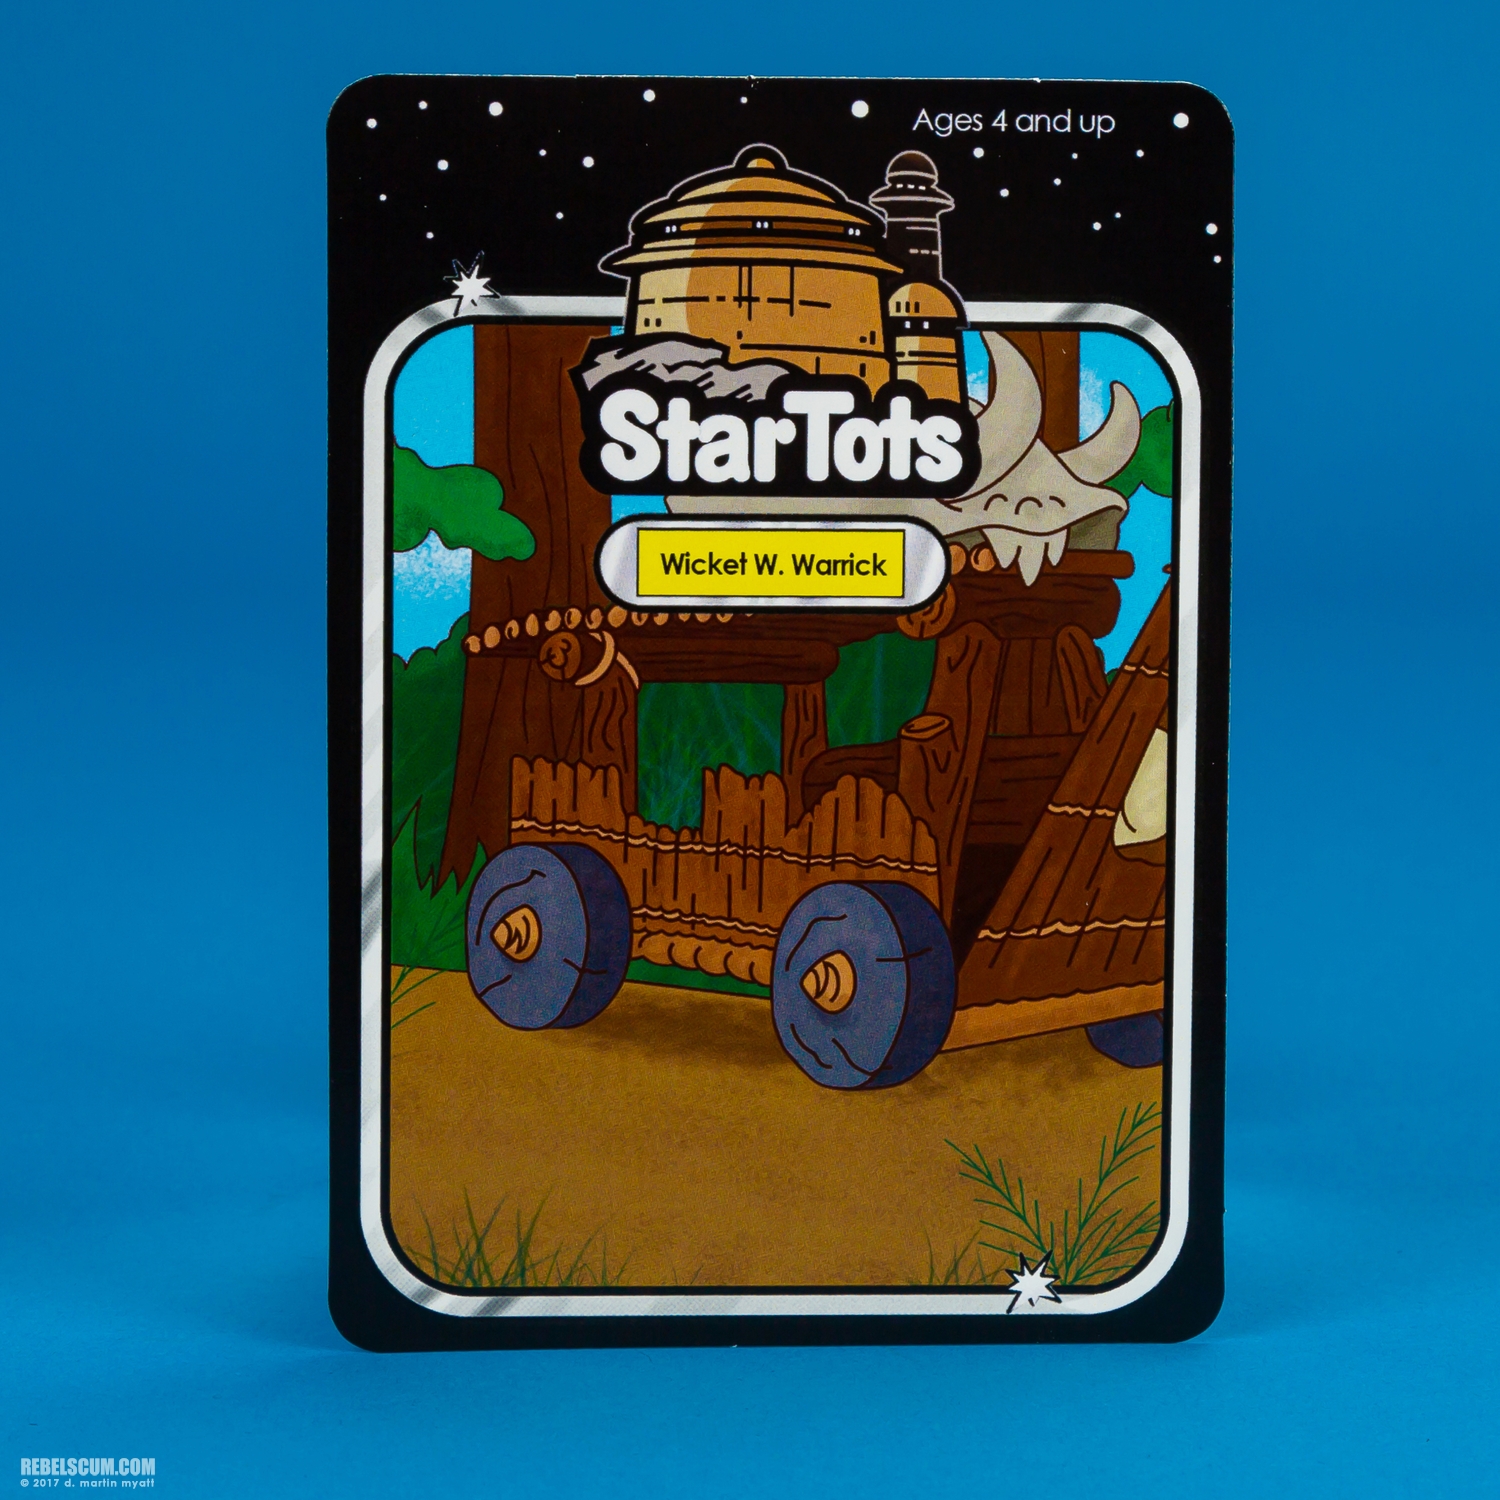 Star-Tots-Star-Wars-Celebration-Collecting-Track-2017-023.jpg